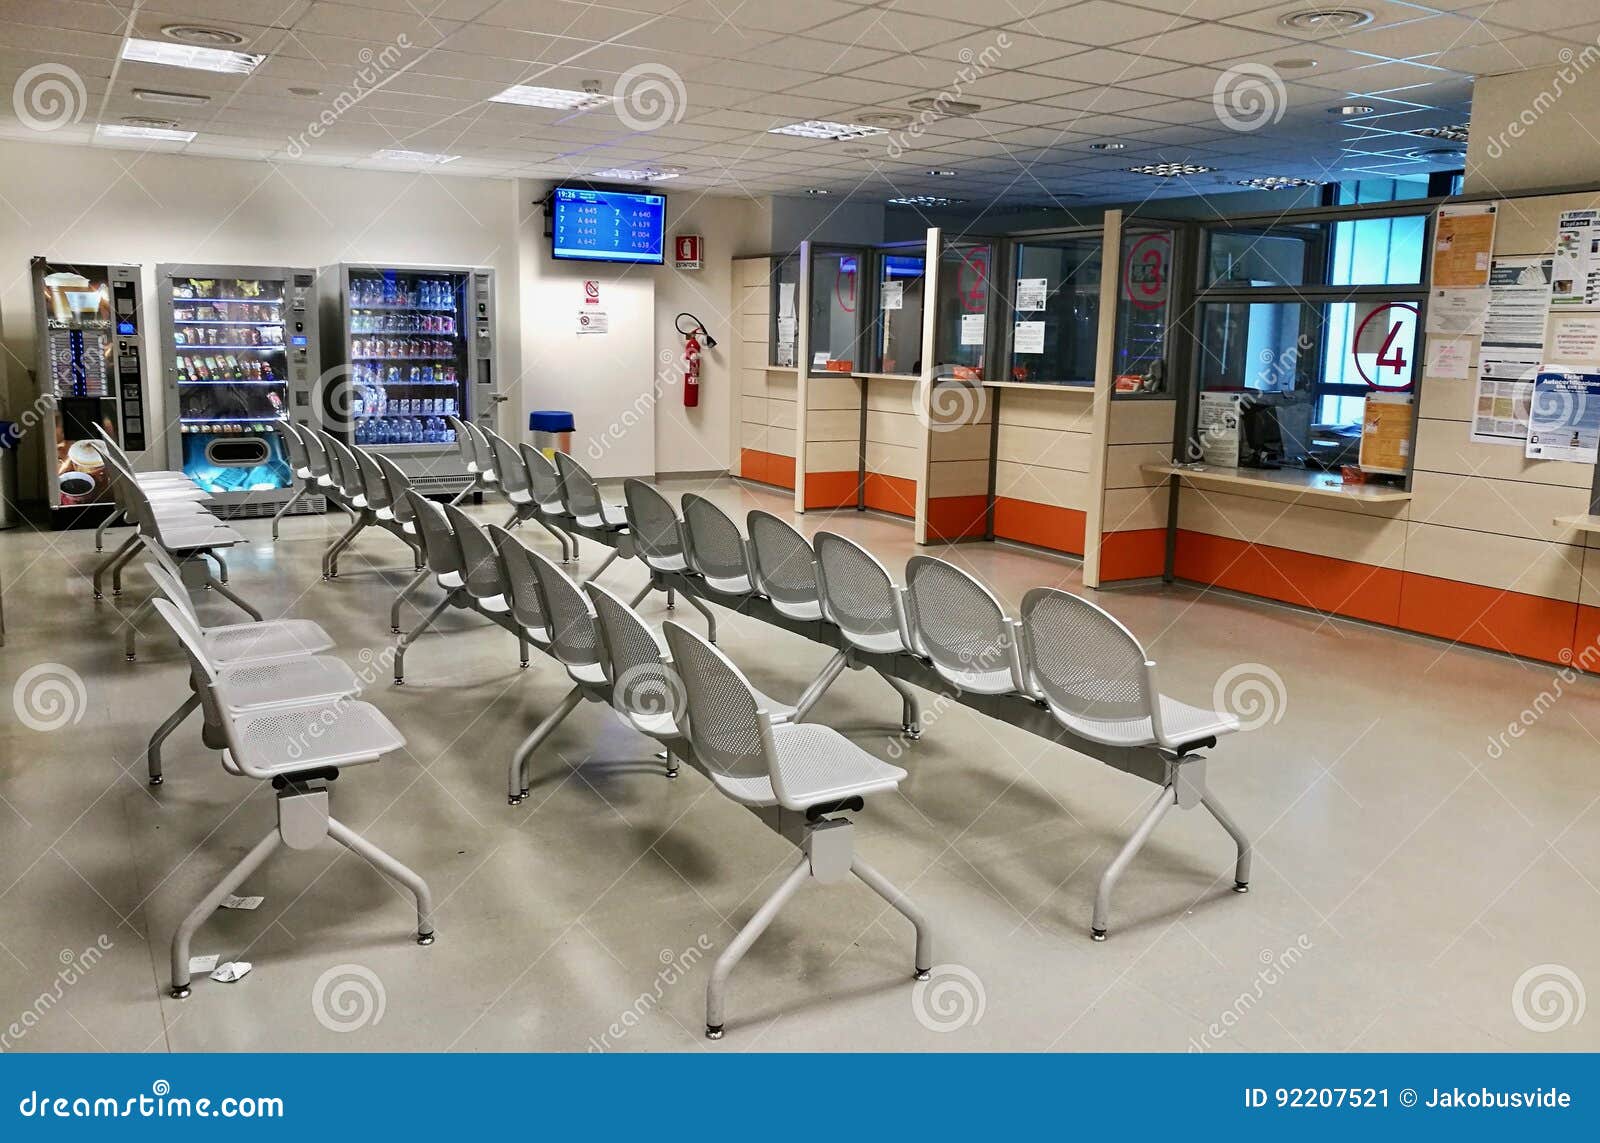 Hospital Reception Waiting Room Stock Image Image Of Hallway